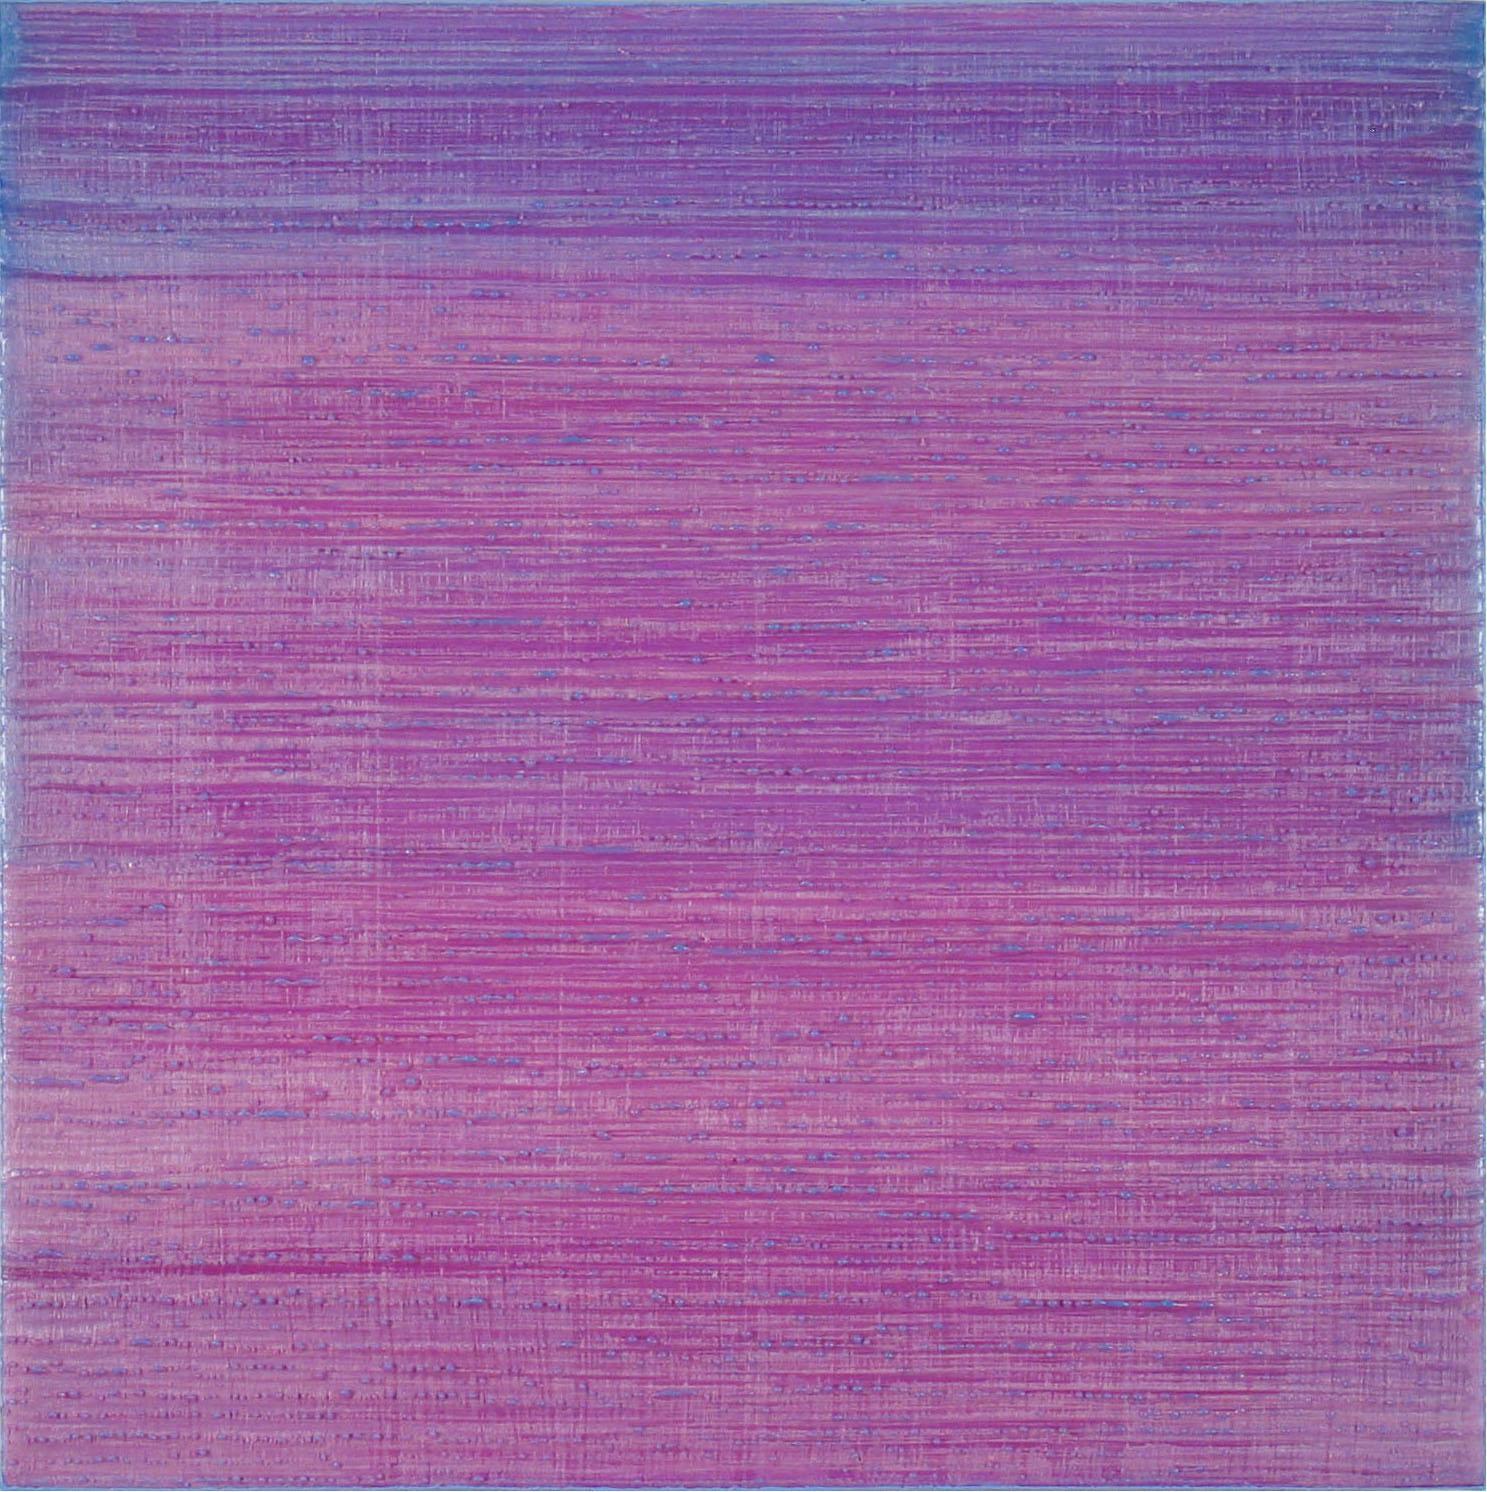 Silk Road 408, Lavender Purple, Bright Blue Edge Square Encaustic Painting